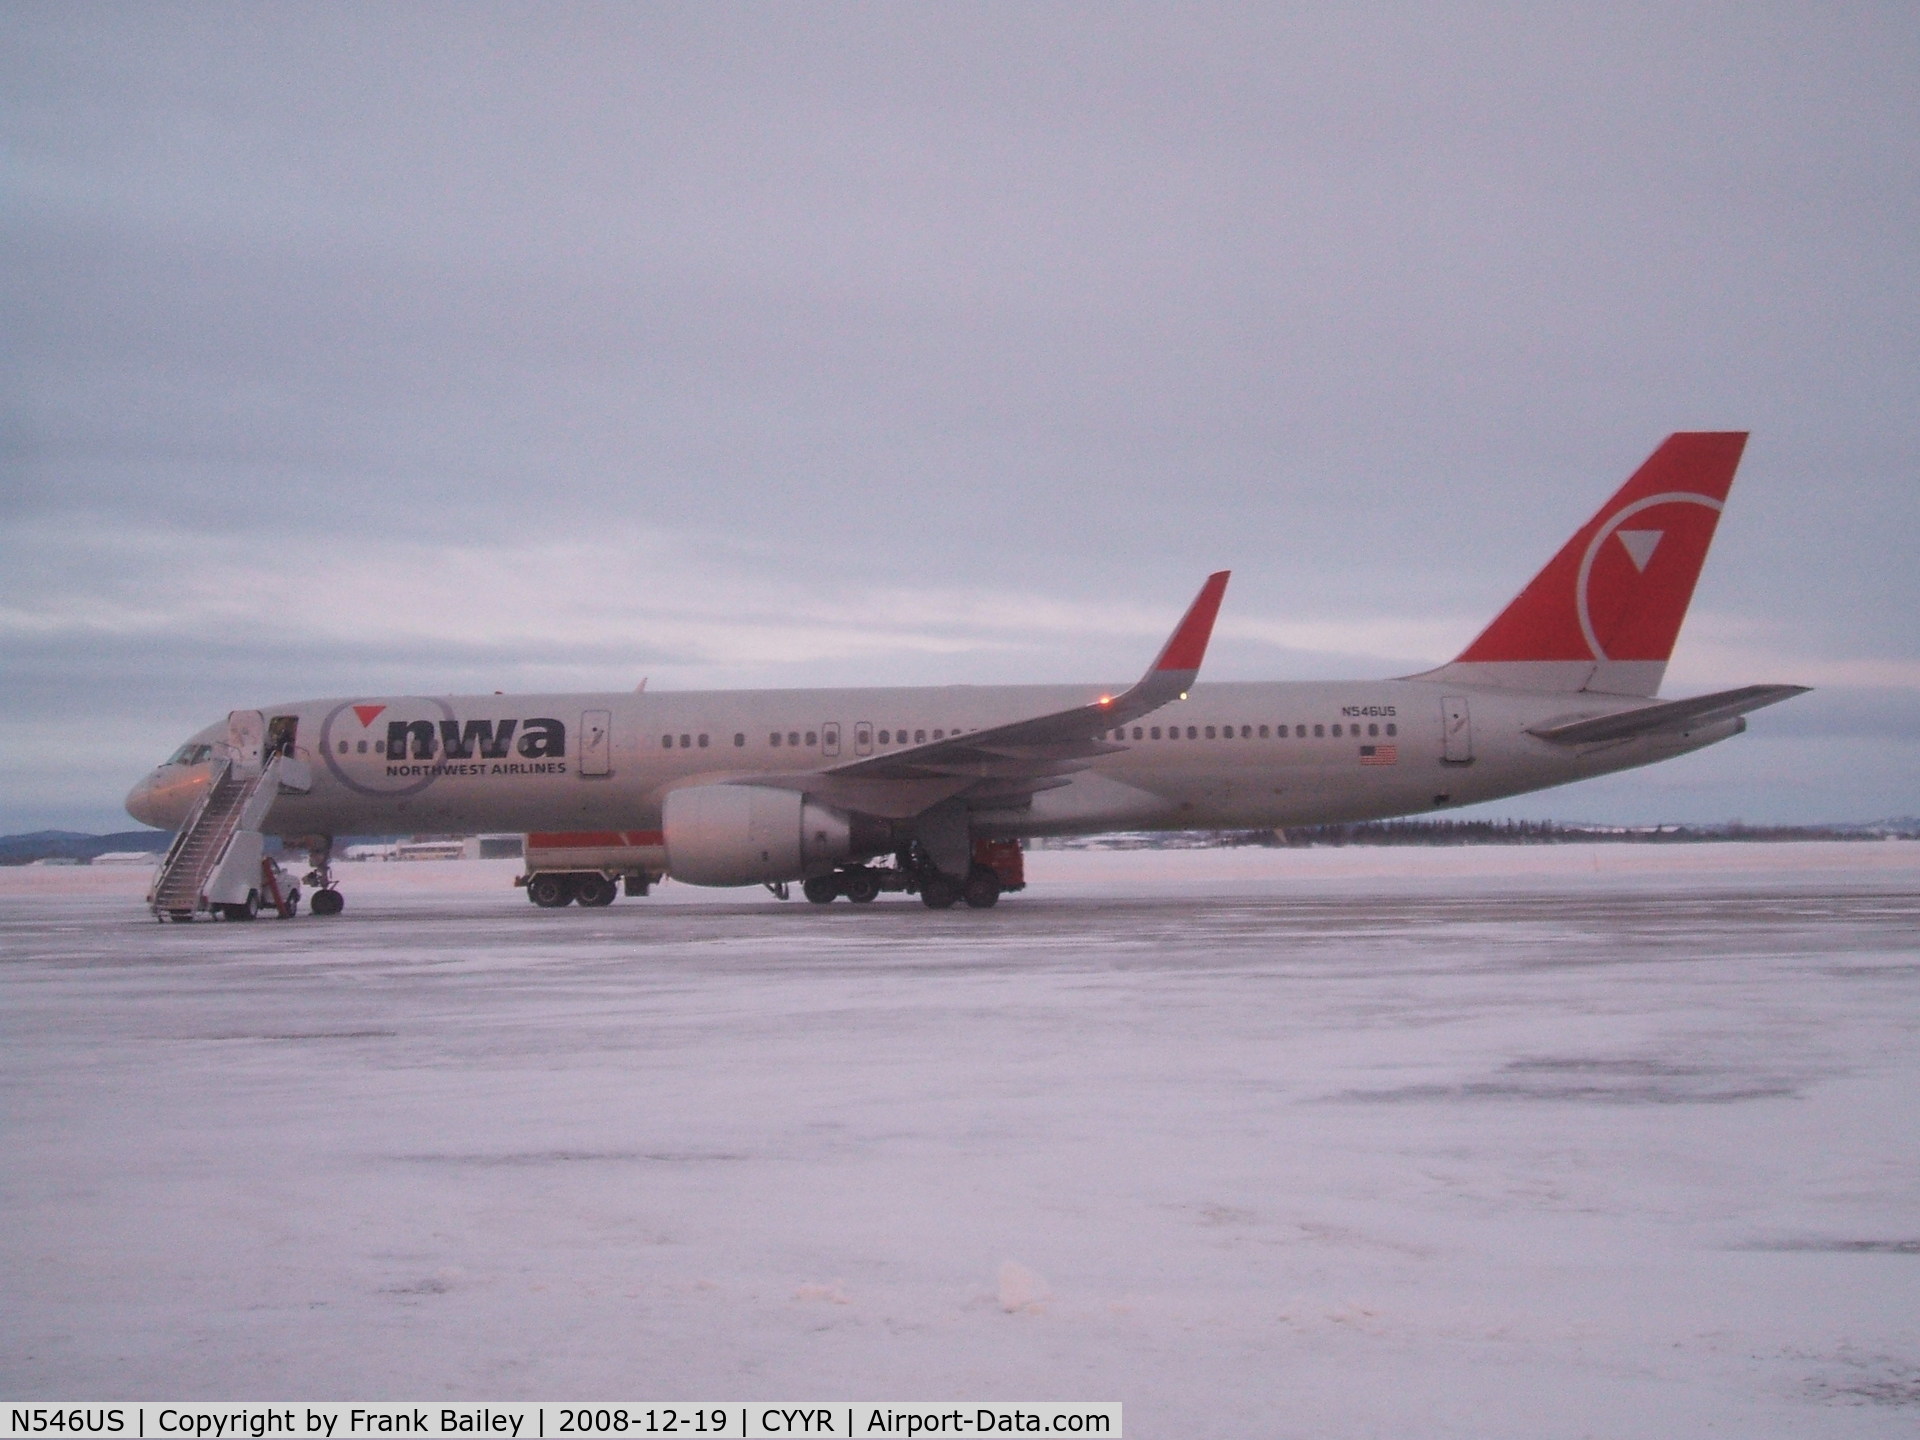 N546US, 1996 Boeing 757-251 C/N 26493, NWA  parked at Woodward Aviation FBO. Dec 19/08